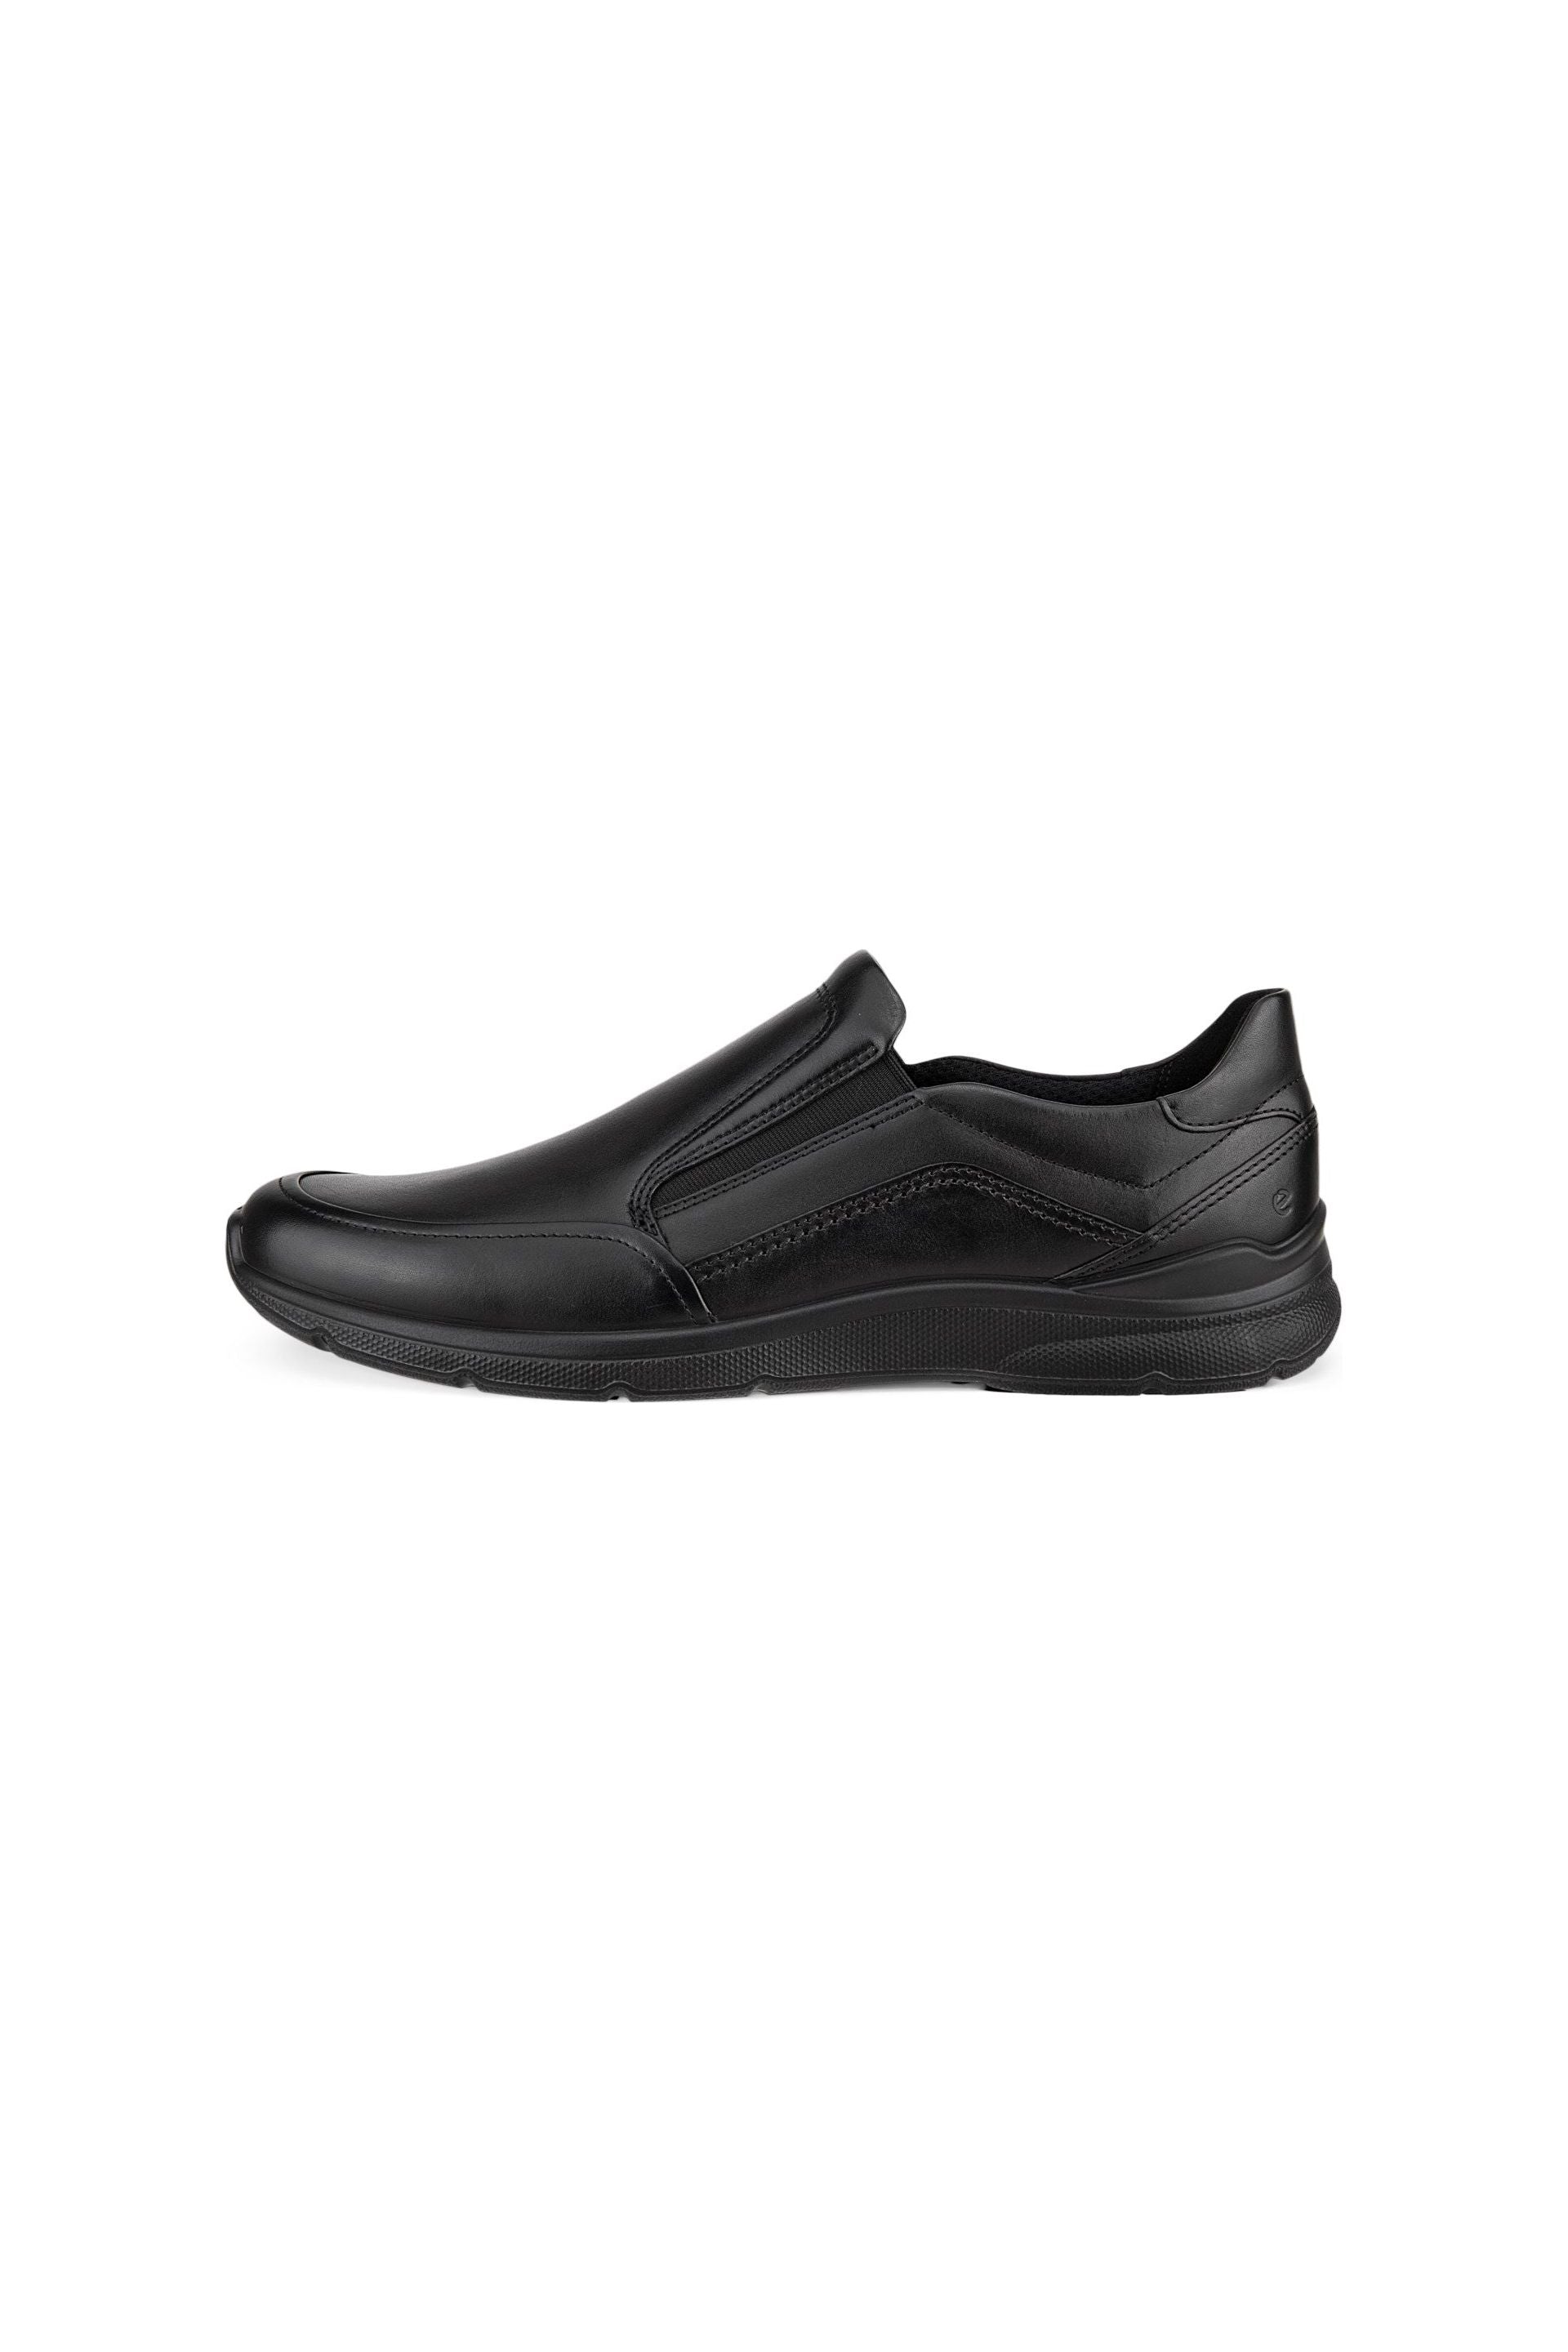 Ecco Irving Mens Shoe 511744-01001 Black leather